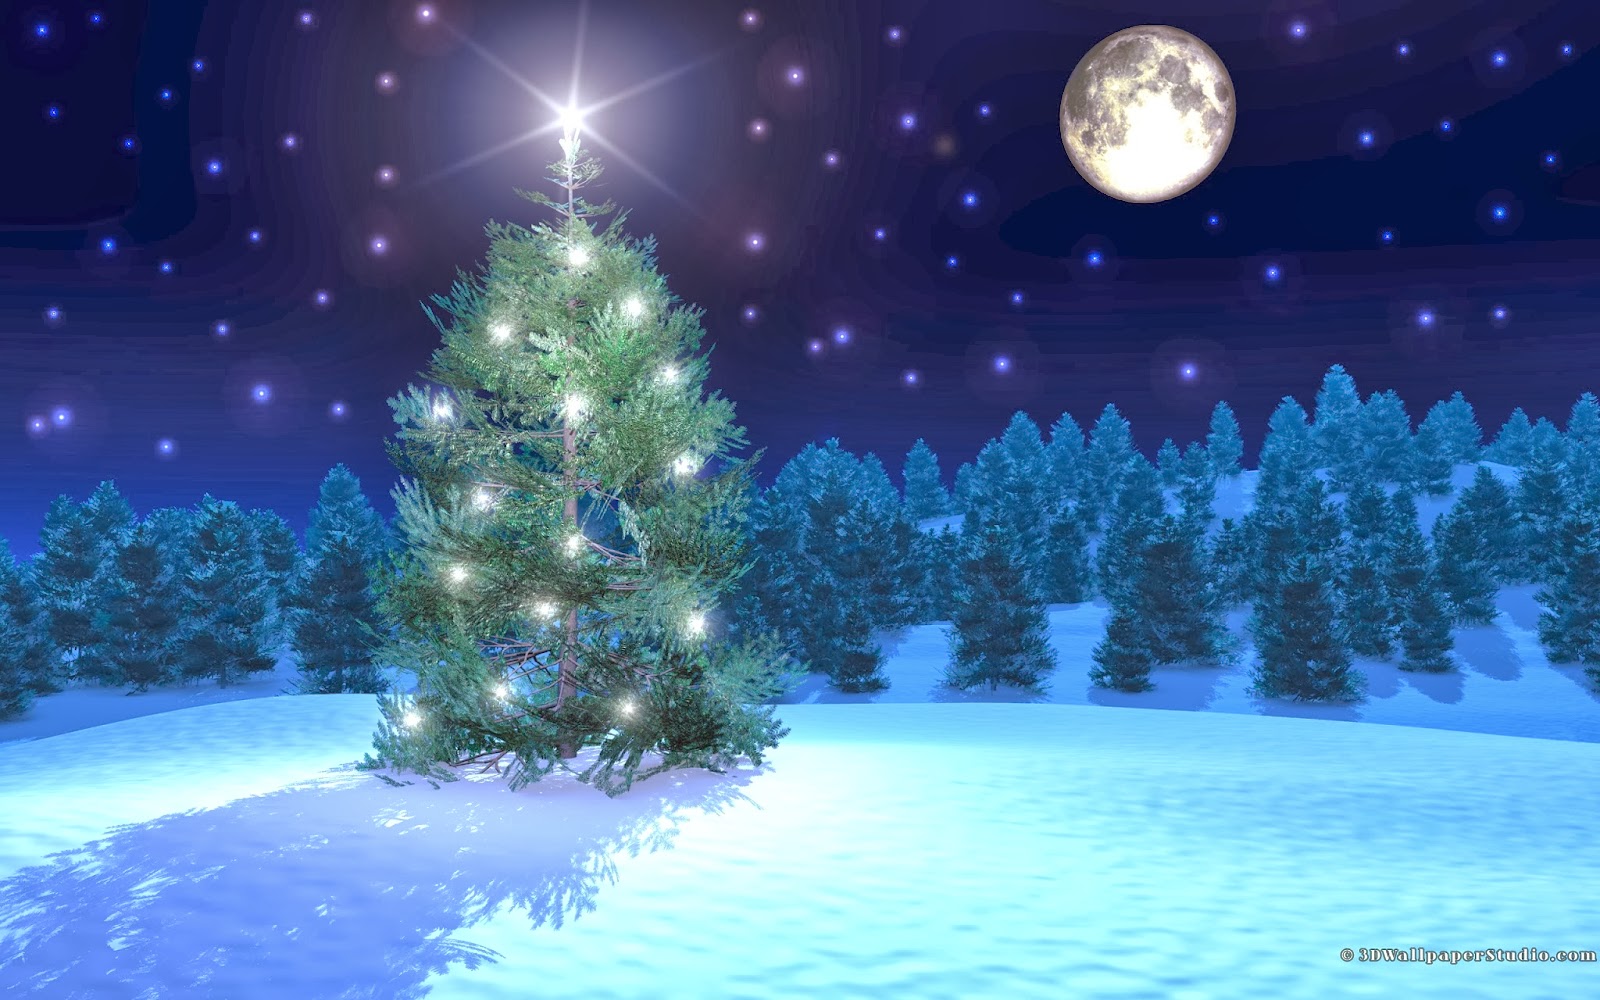 HD Wallpaper 4u 3d Christmas Tree For Desktop